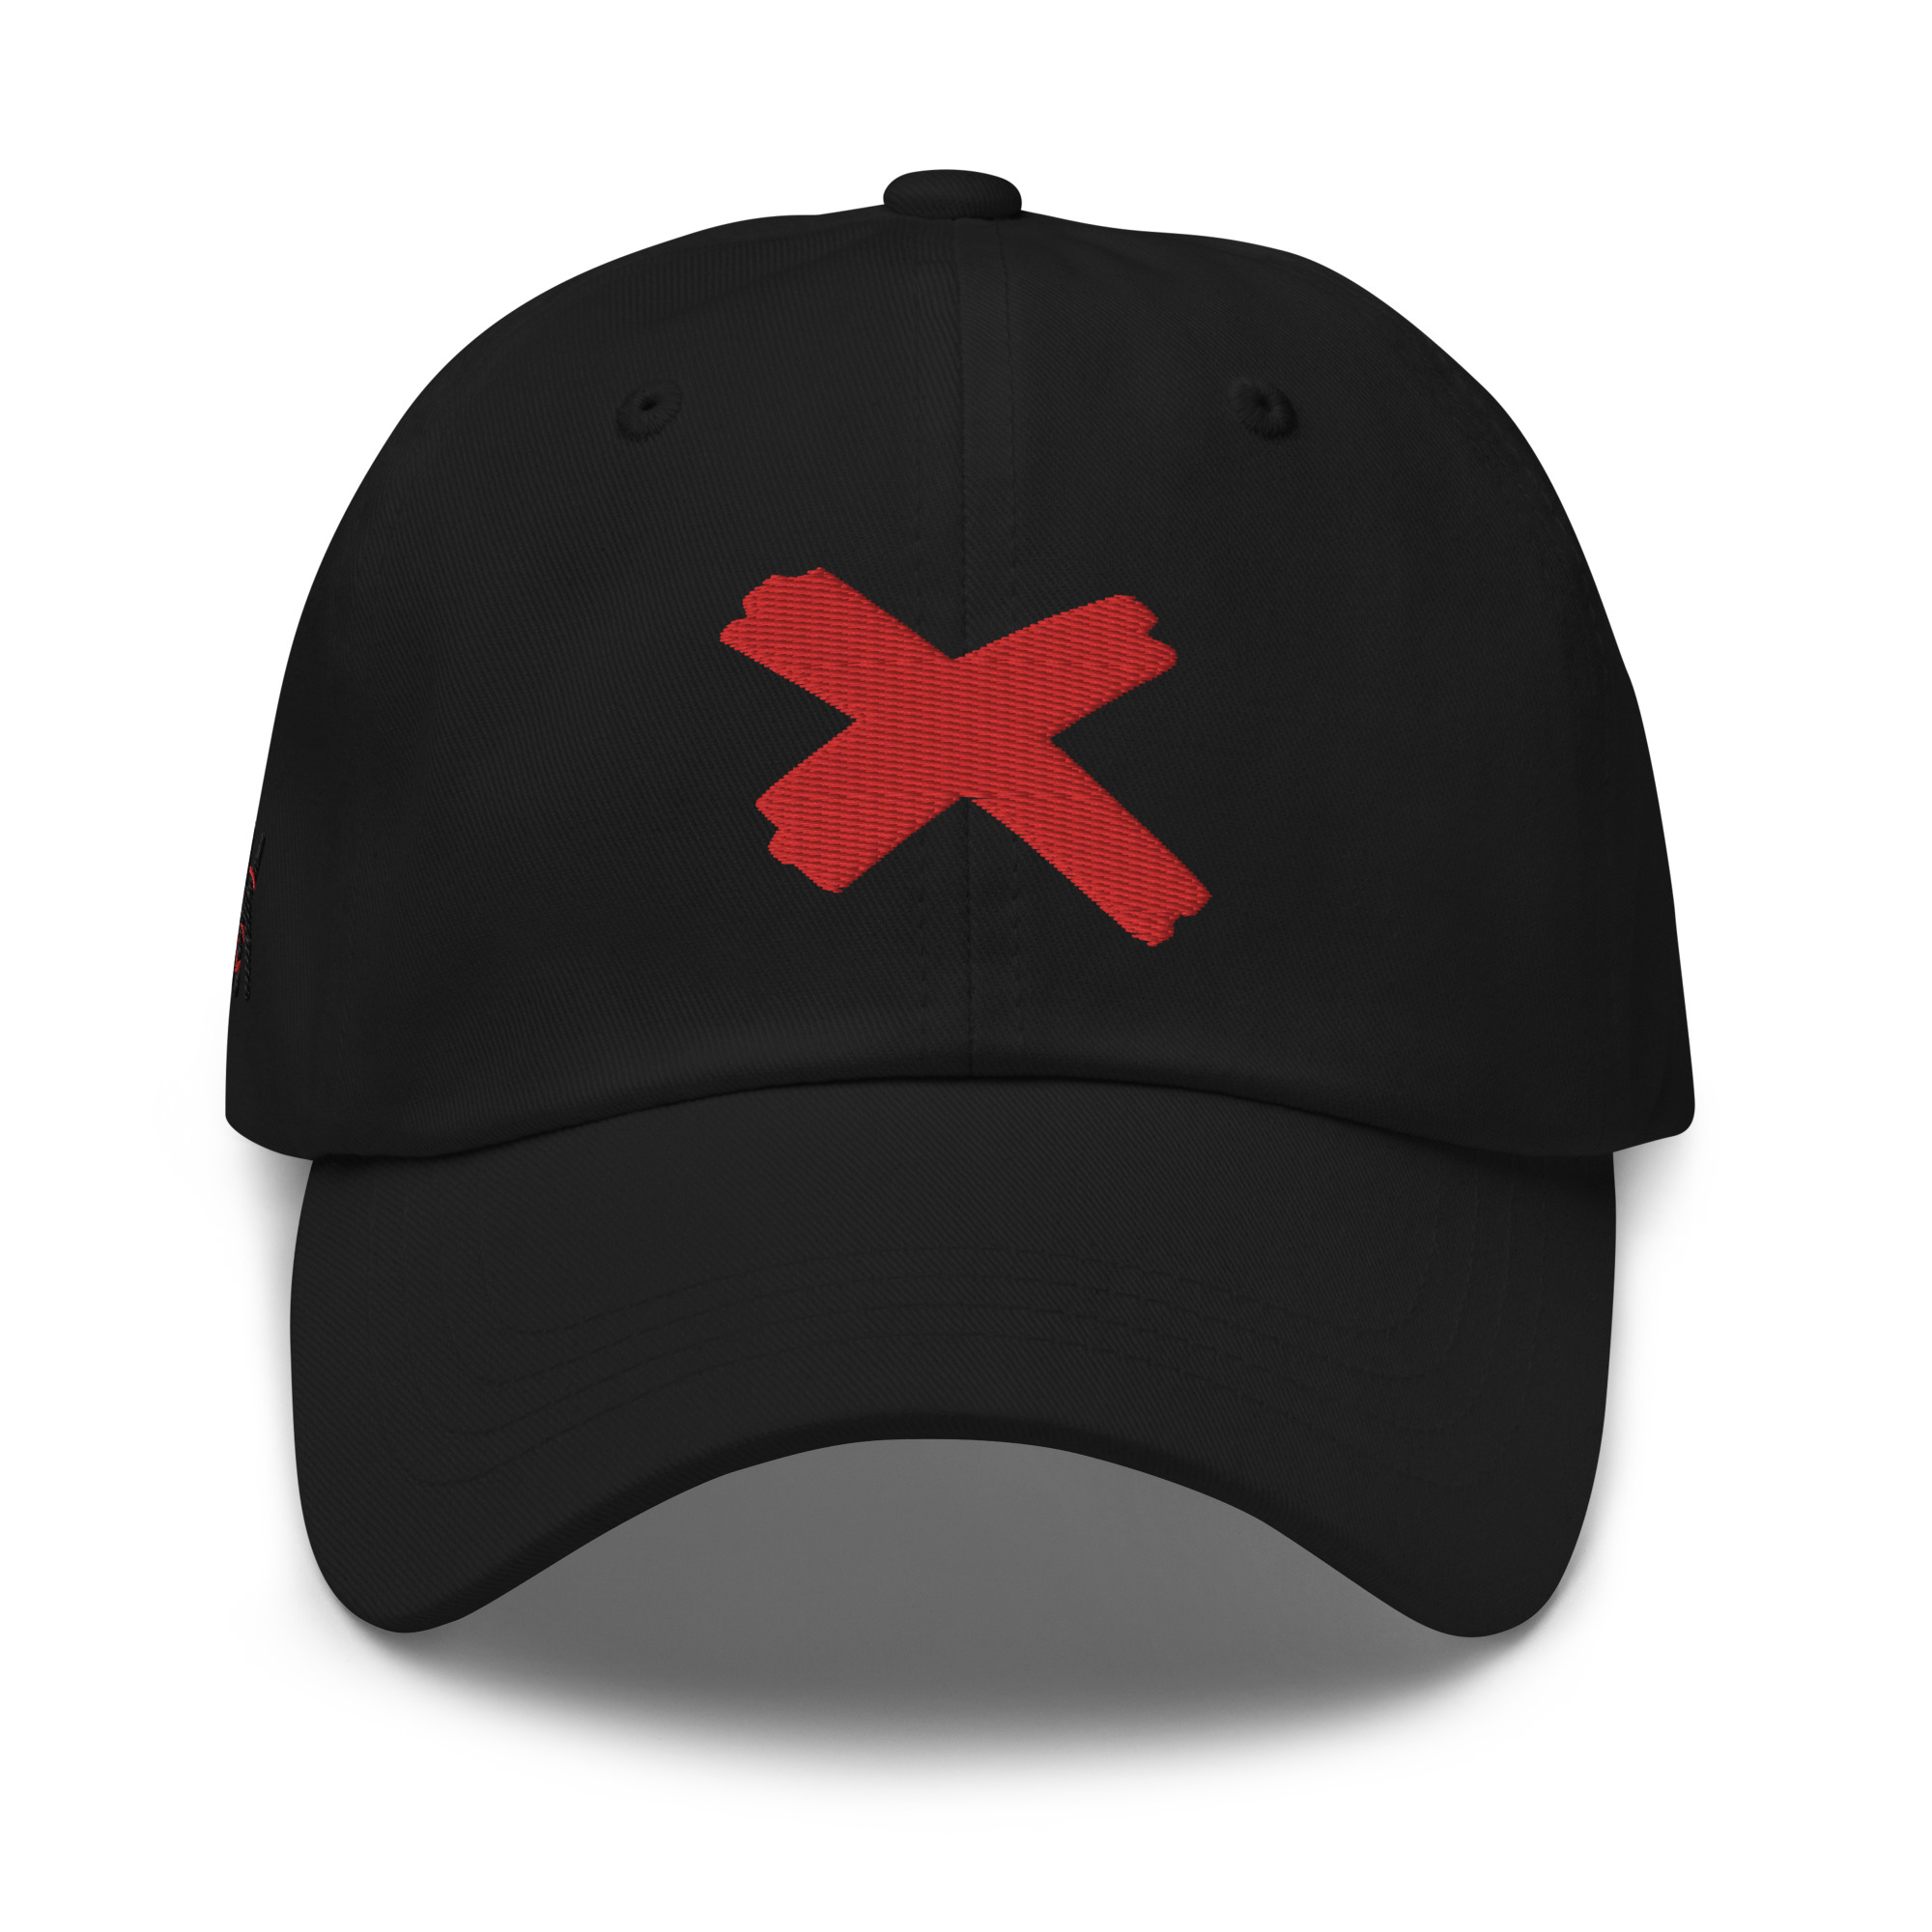 X-Mark Black versionDad hat